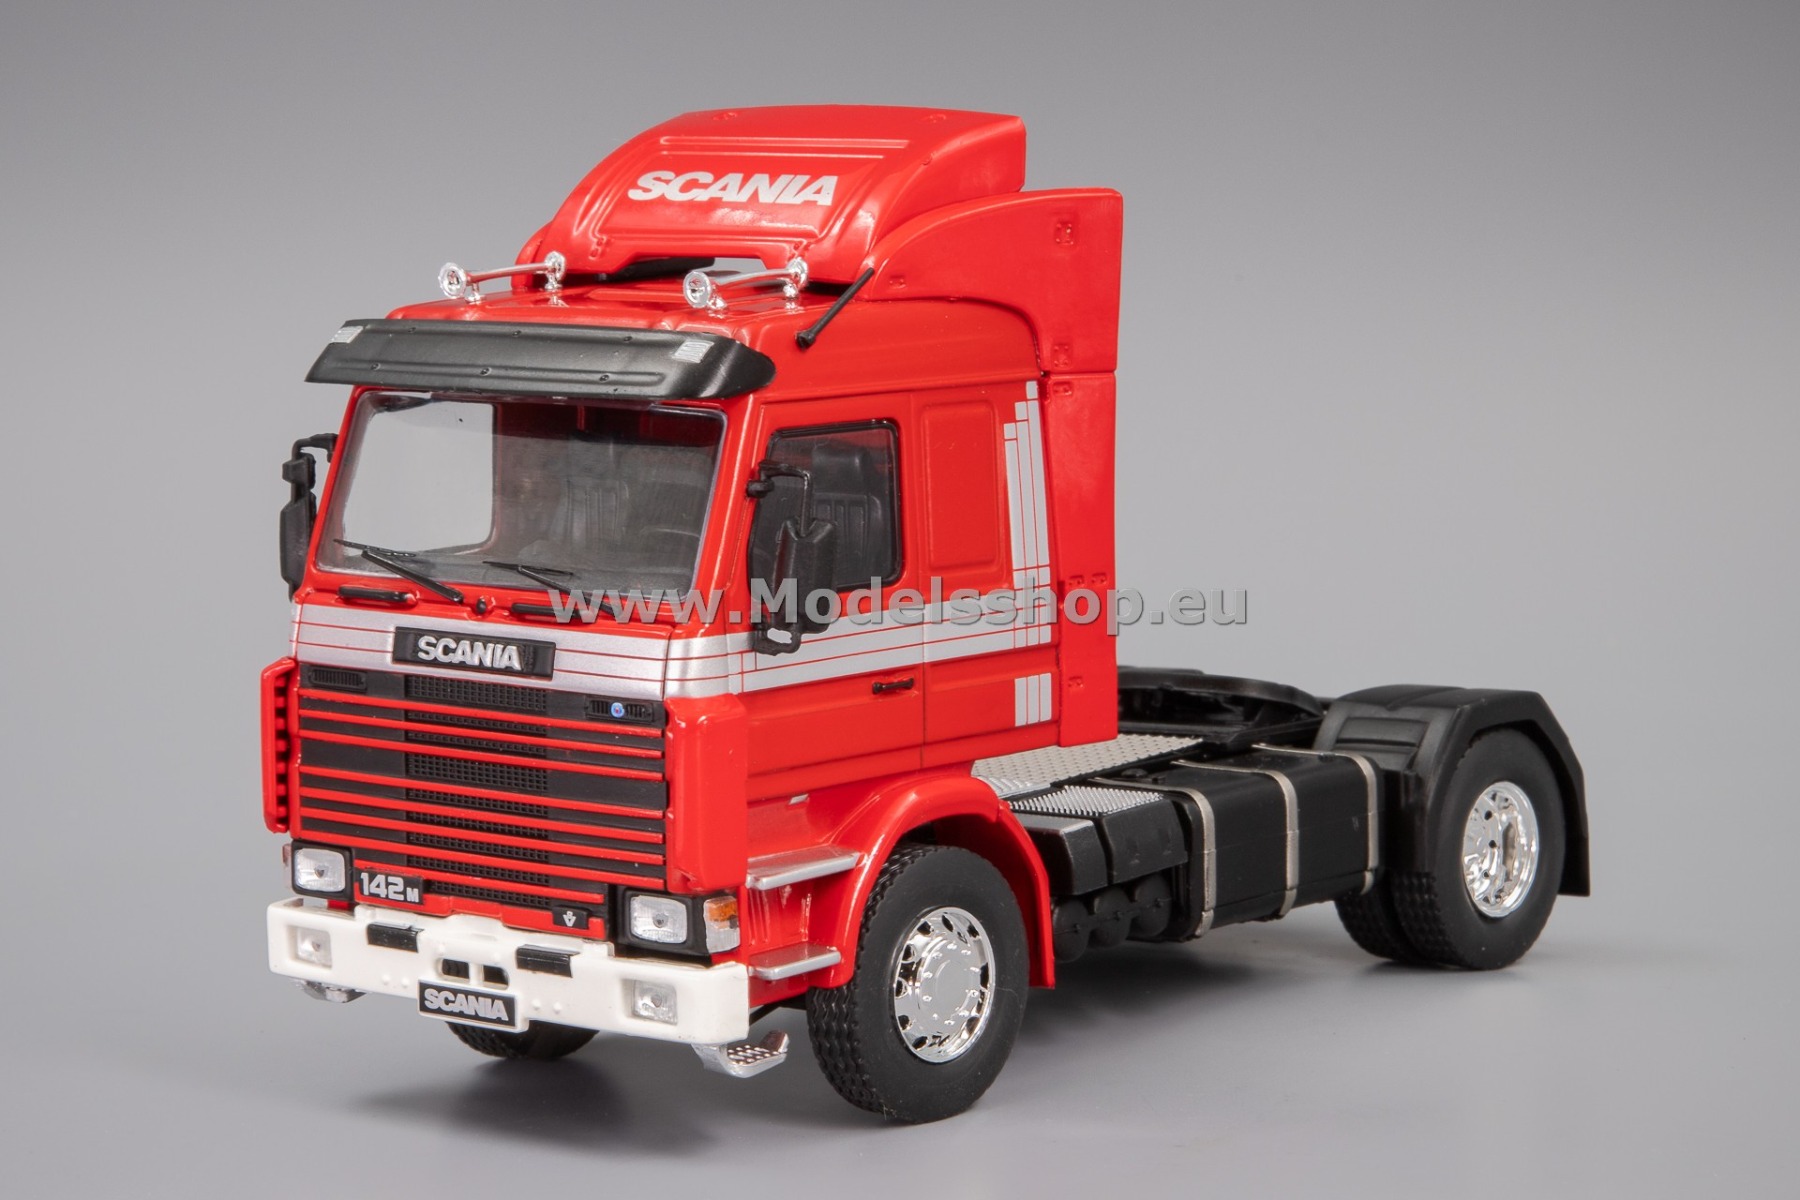 IXO TR173.22 Scania 142 M tractor truck, 1981 /red - silver/